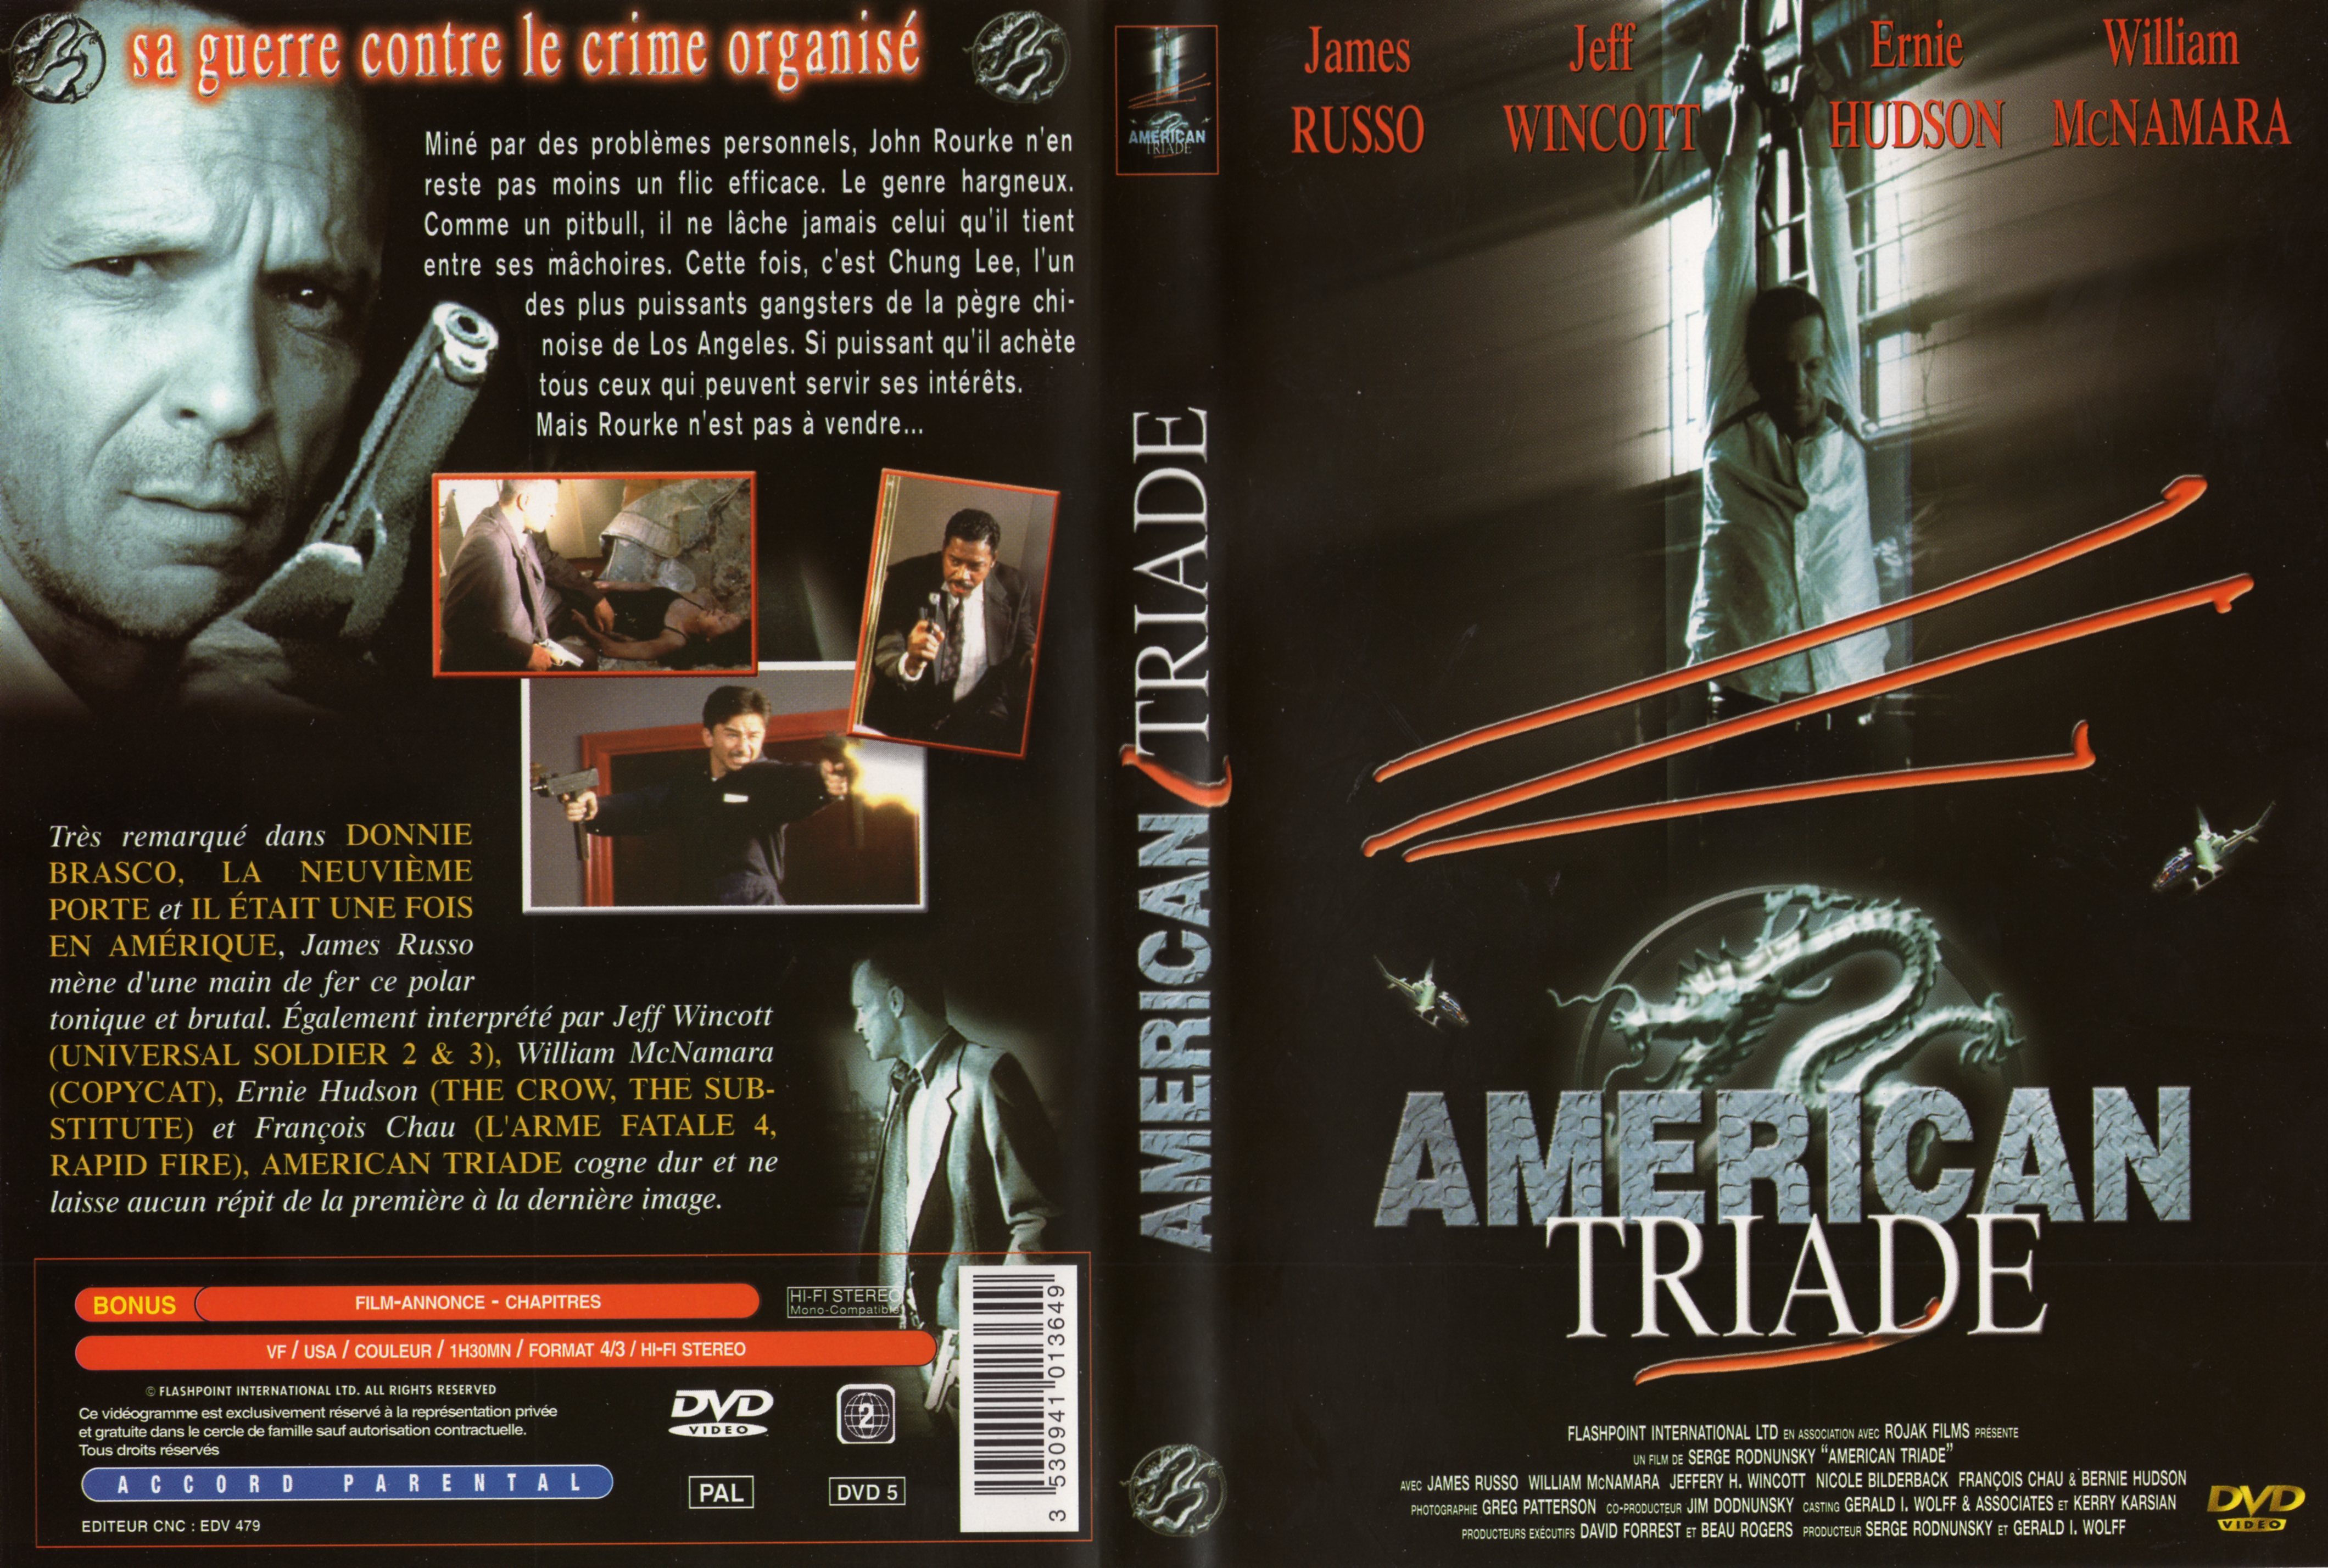 Jaquette DVD American triade